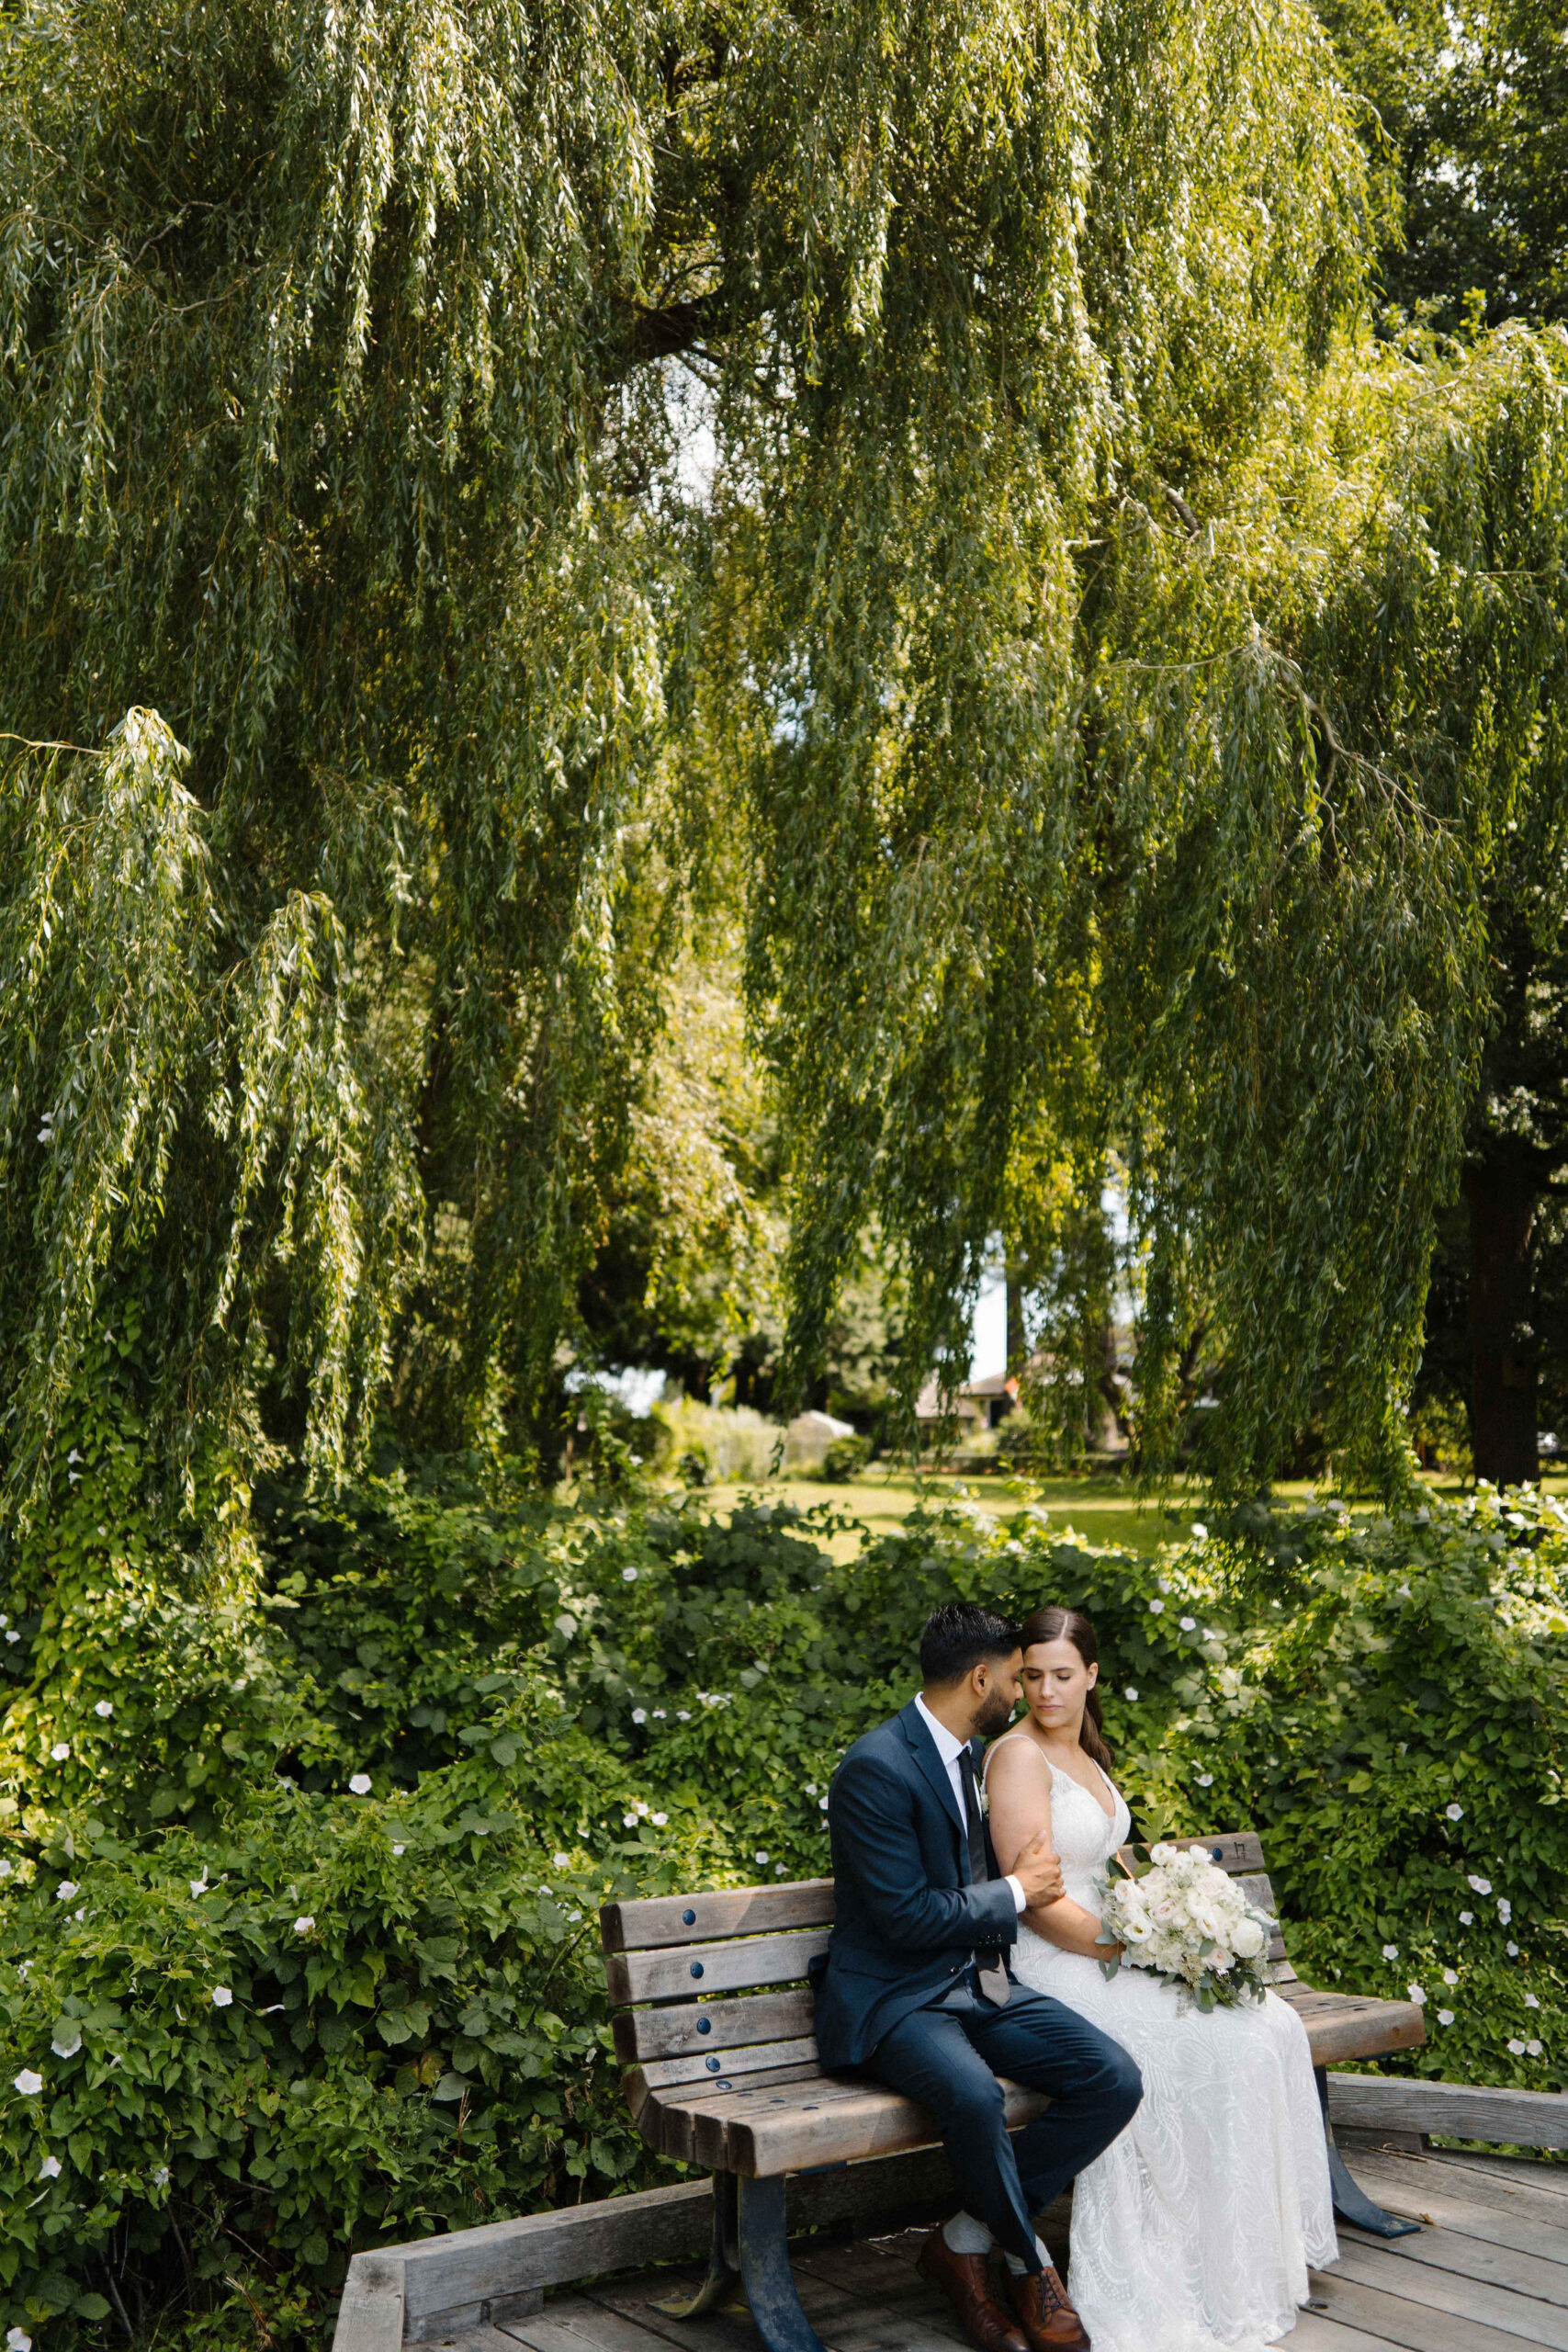 Vancouver elopement at Deer Lake Park in Burnaby